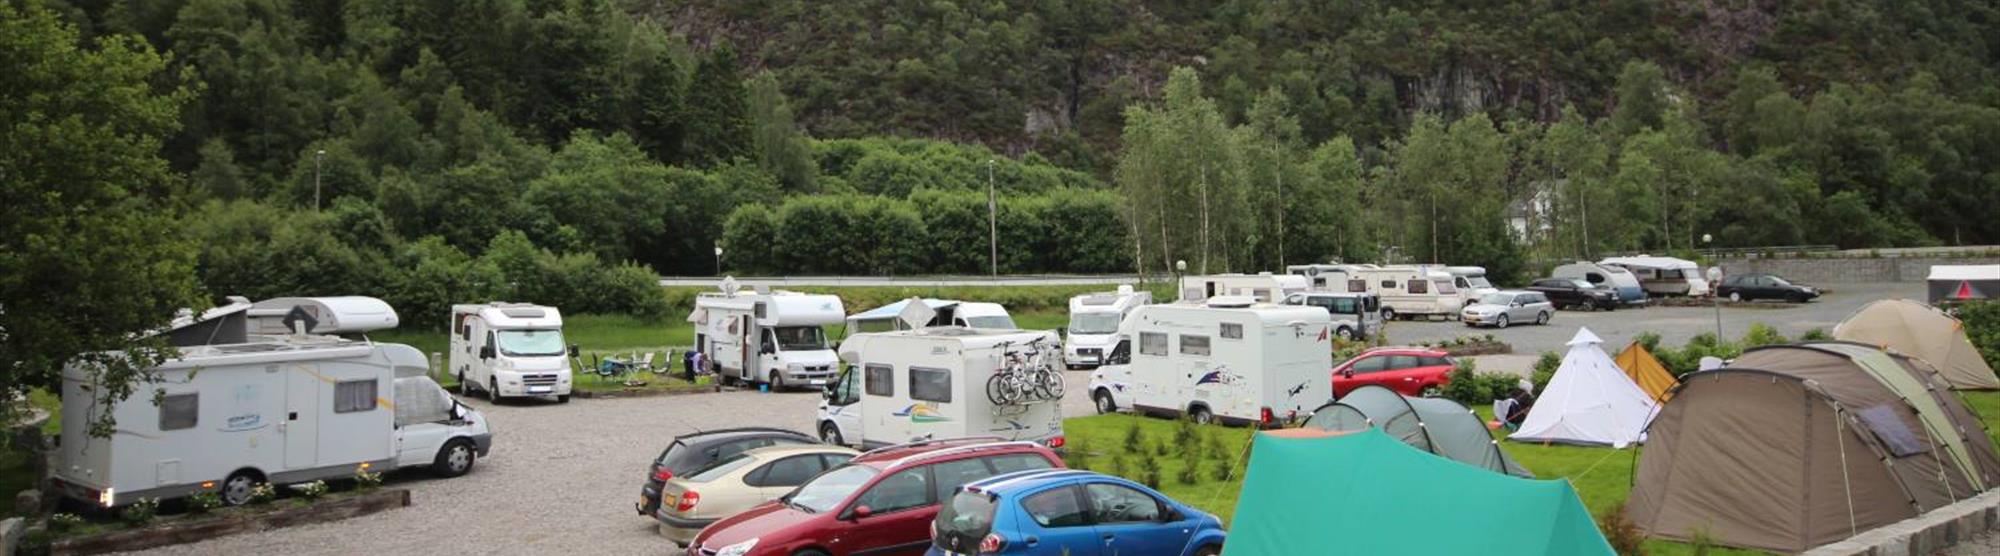 Bratland camping - motorhome parking